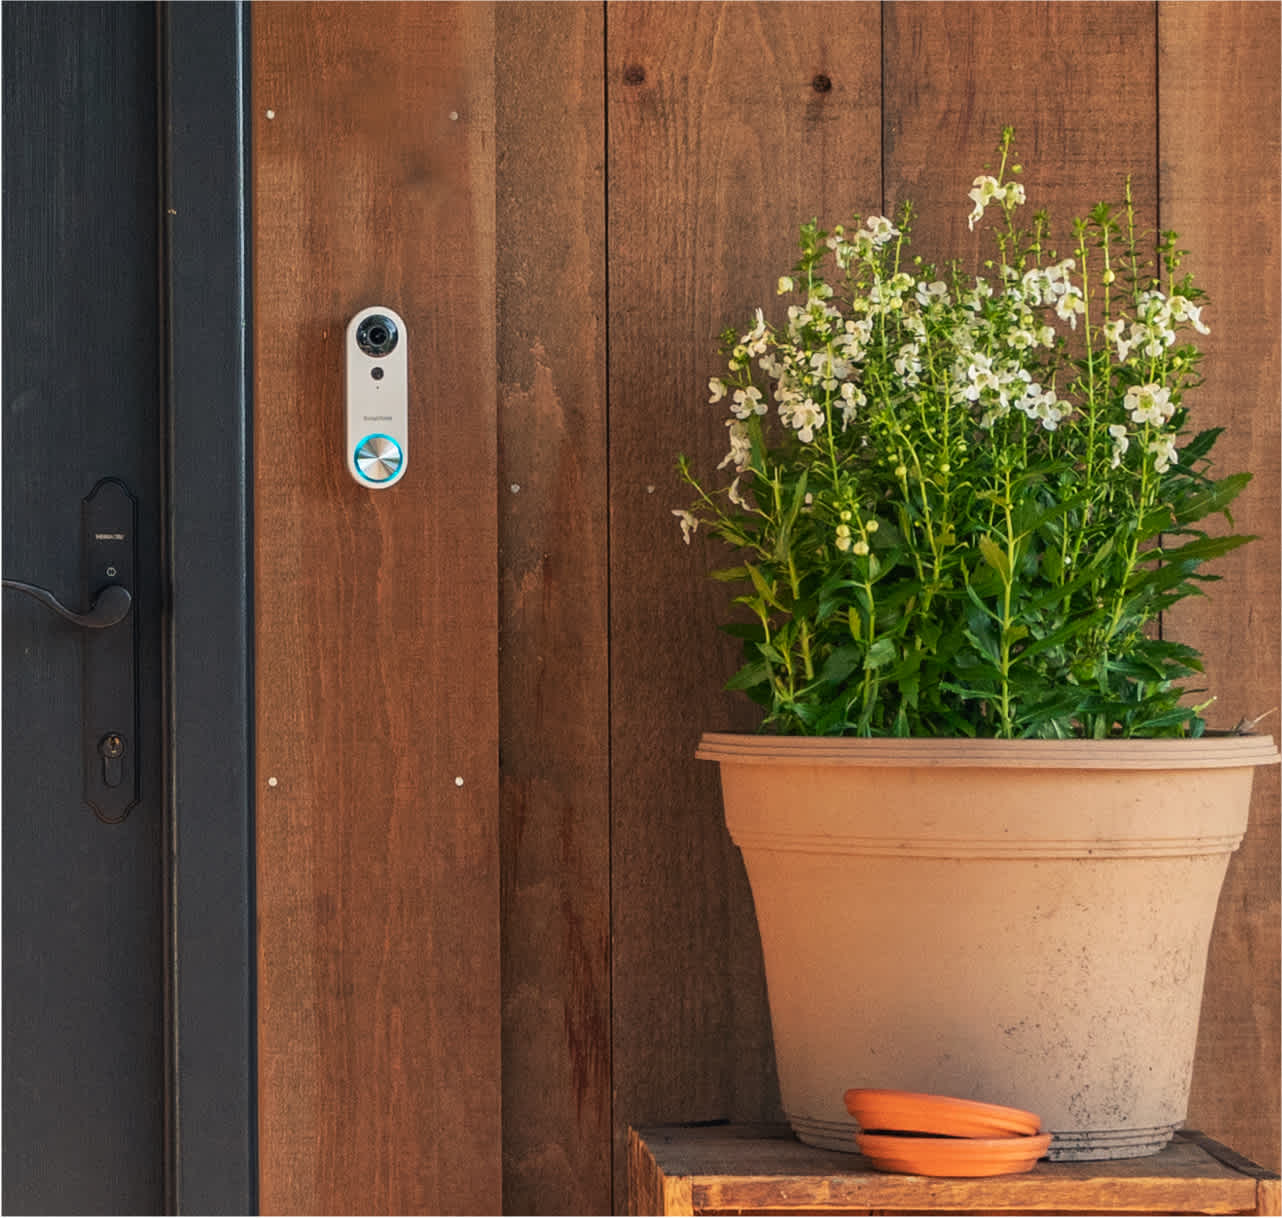 SimpliSafe Doorbell on wall